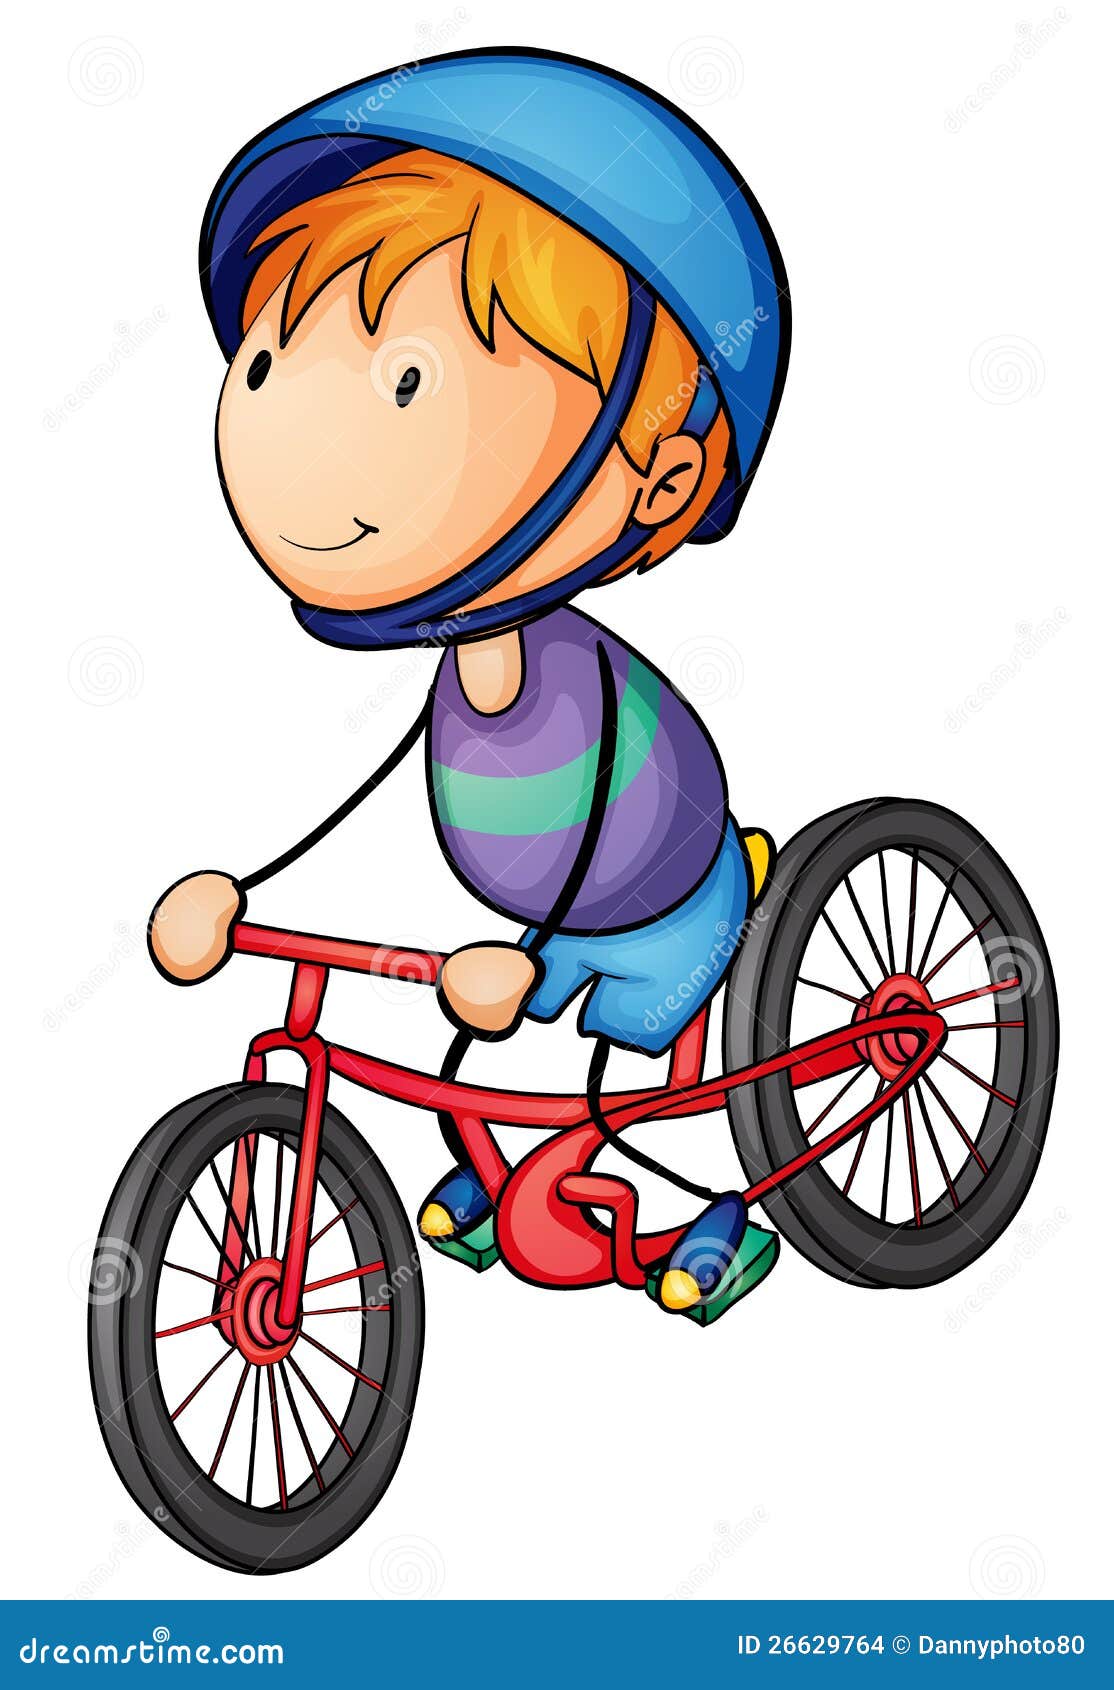 clipart boy on bike - photo #15